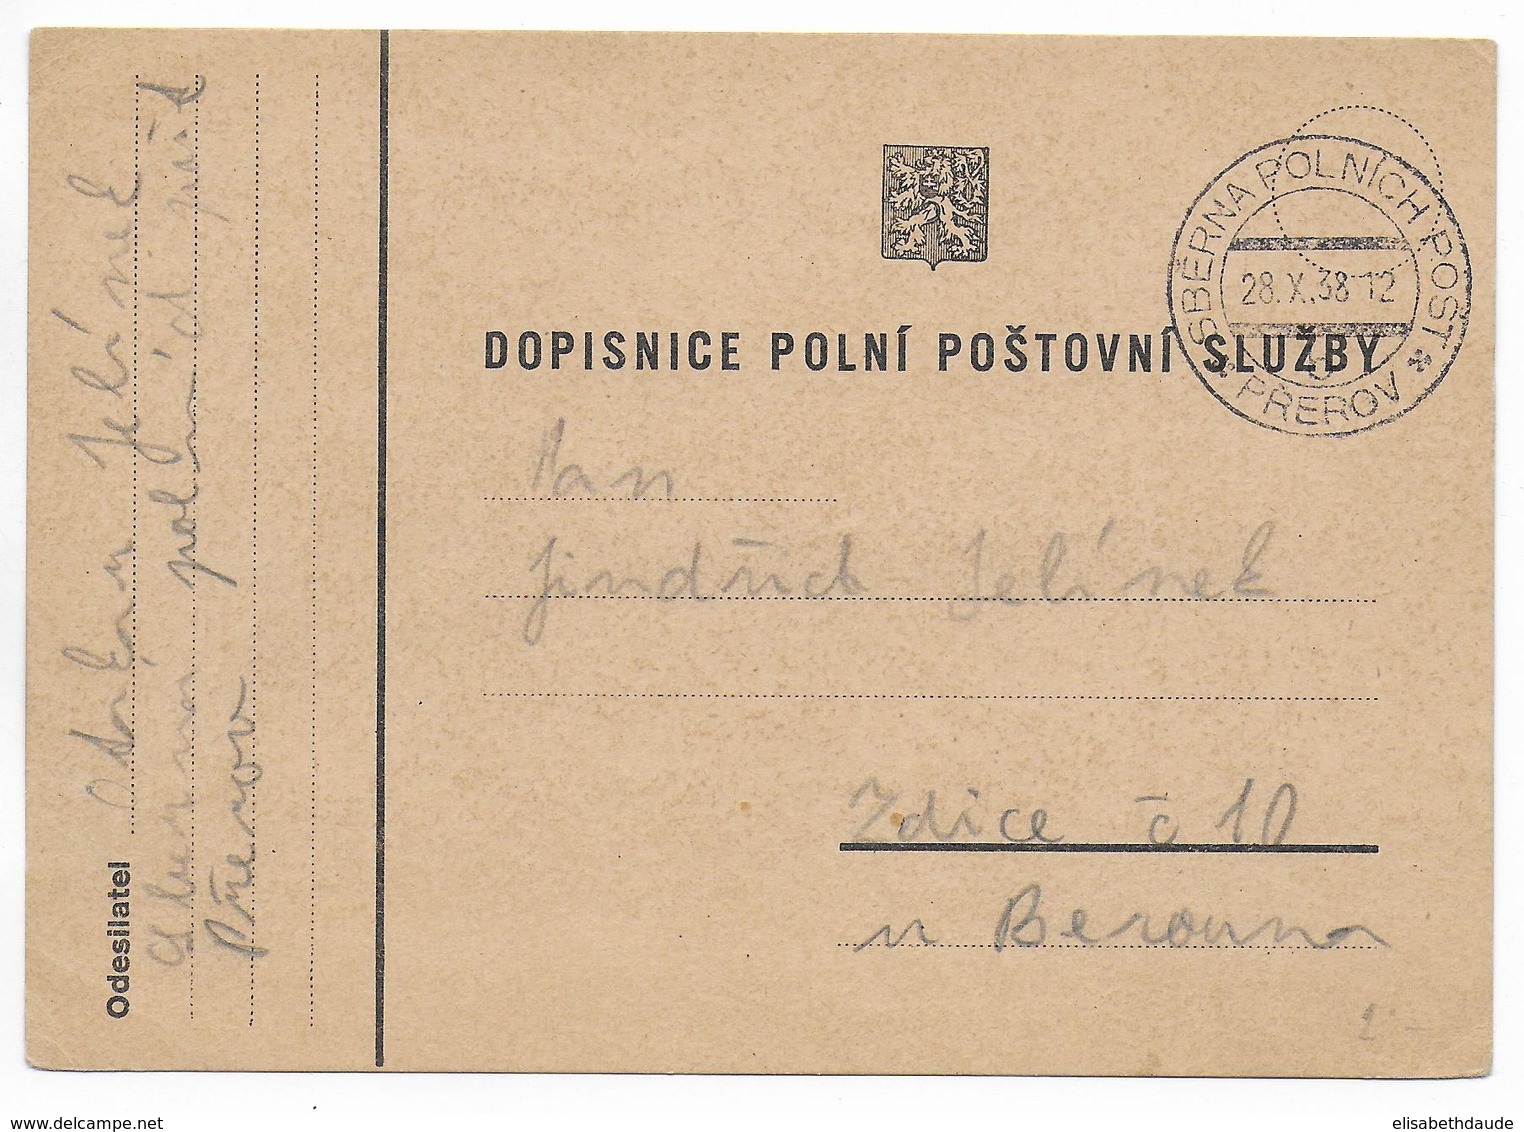 TCHECOSLOVAQUIE - 1938 - MOBILISATION APRES ANNEXION SUDETES  ! CP MILITAIRE FM POLNI POSTA PREROV ! - Lettres & Documents